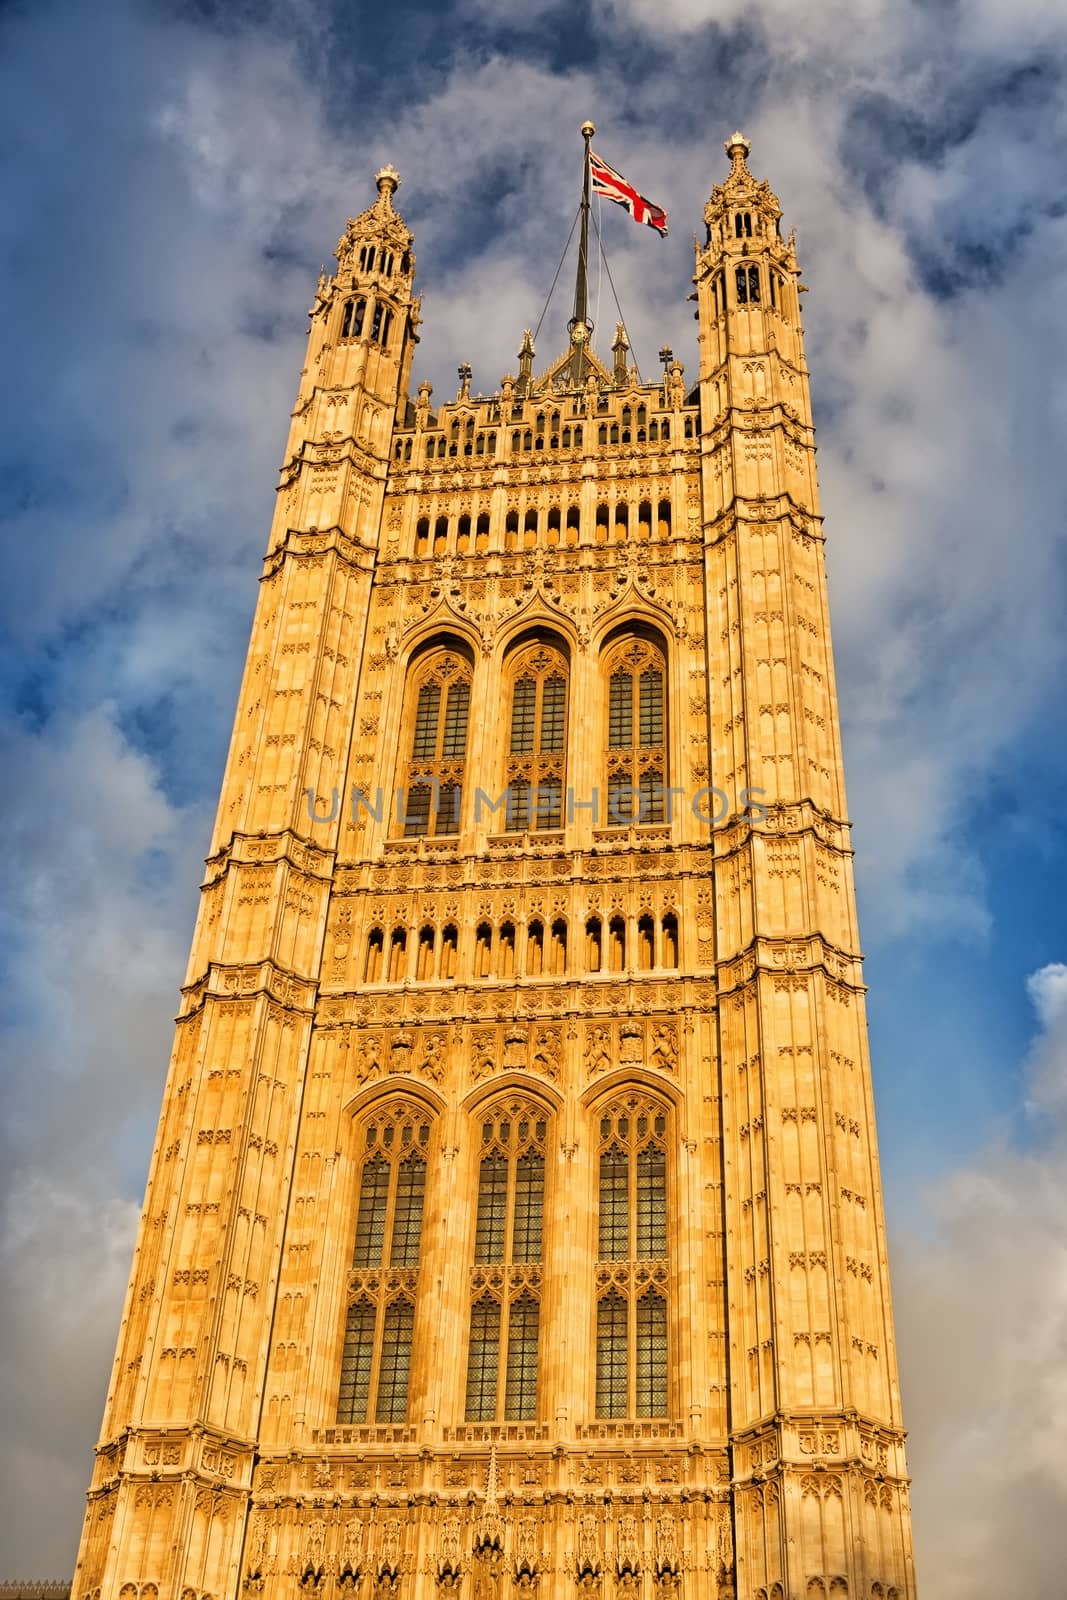 Victoria Tower in London, United Kingdom by mitakag